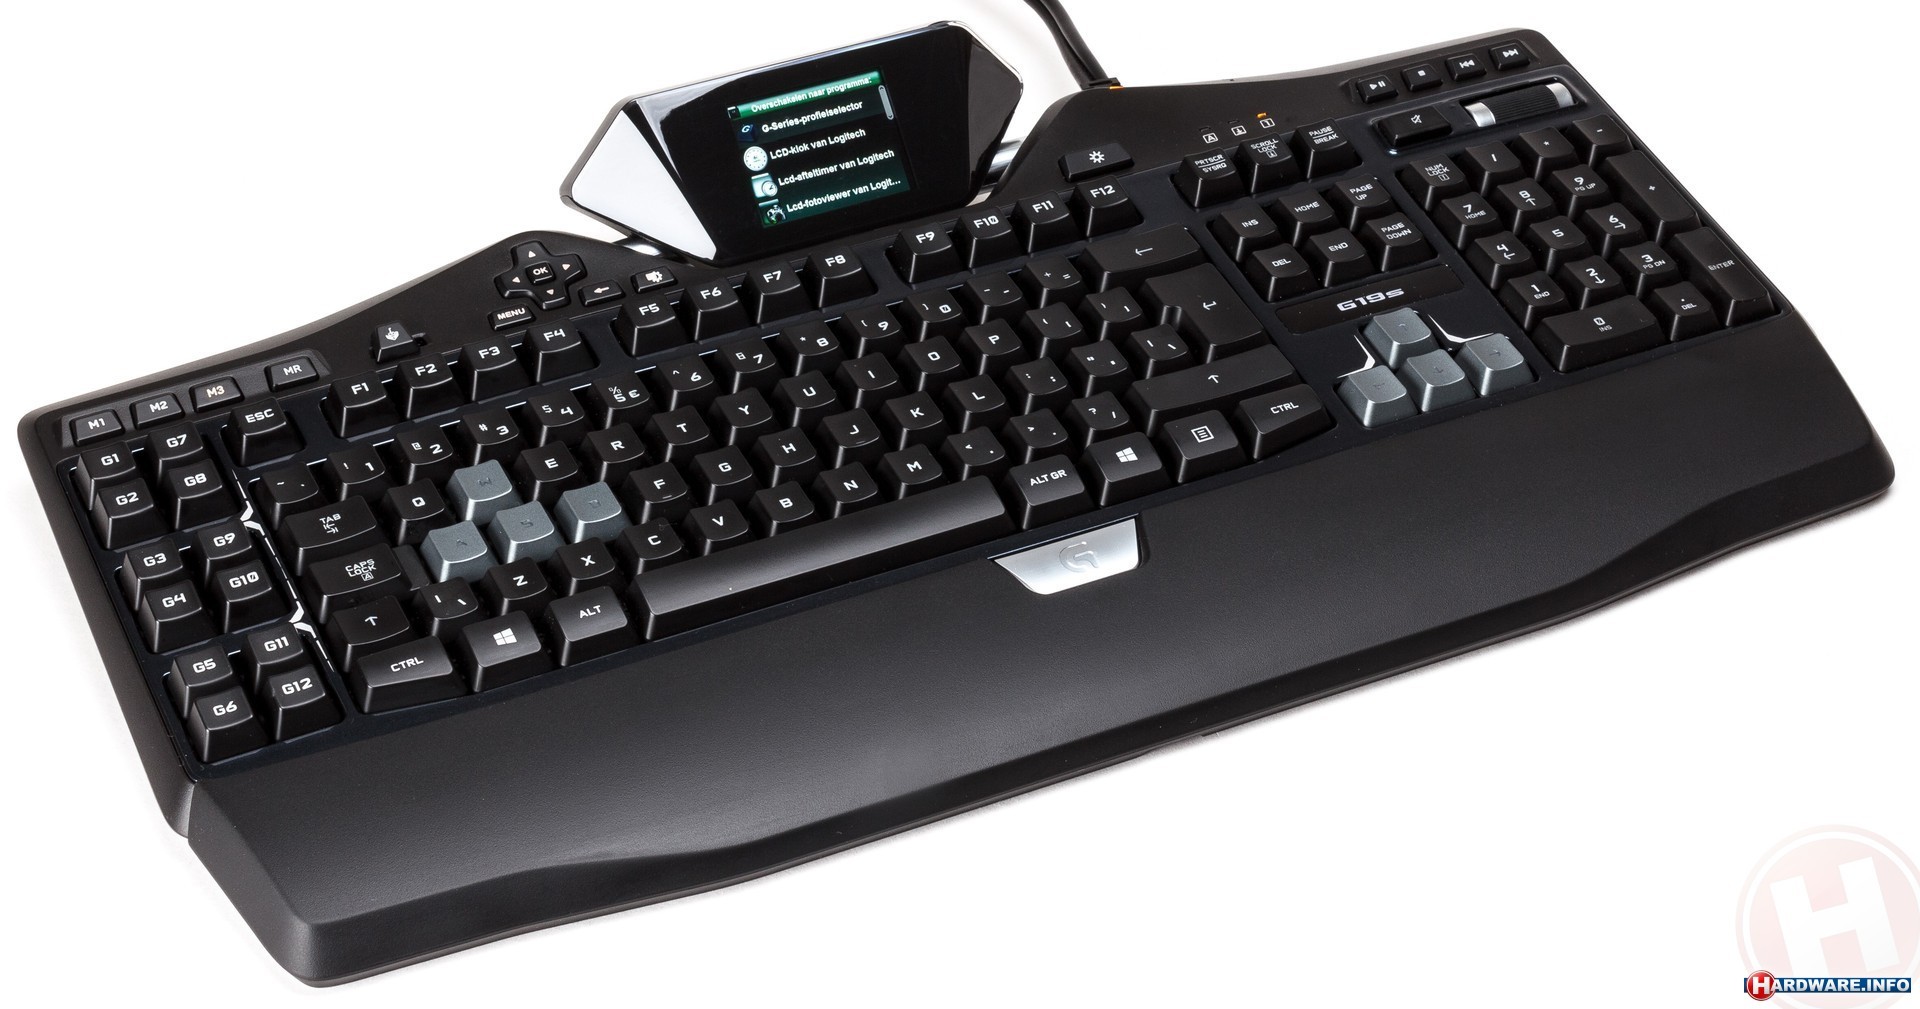 Opnemen Overleg Lima Logitech G19s gaming keyboard review - Conclusie - Hardware Info